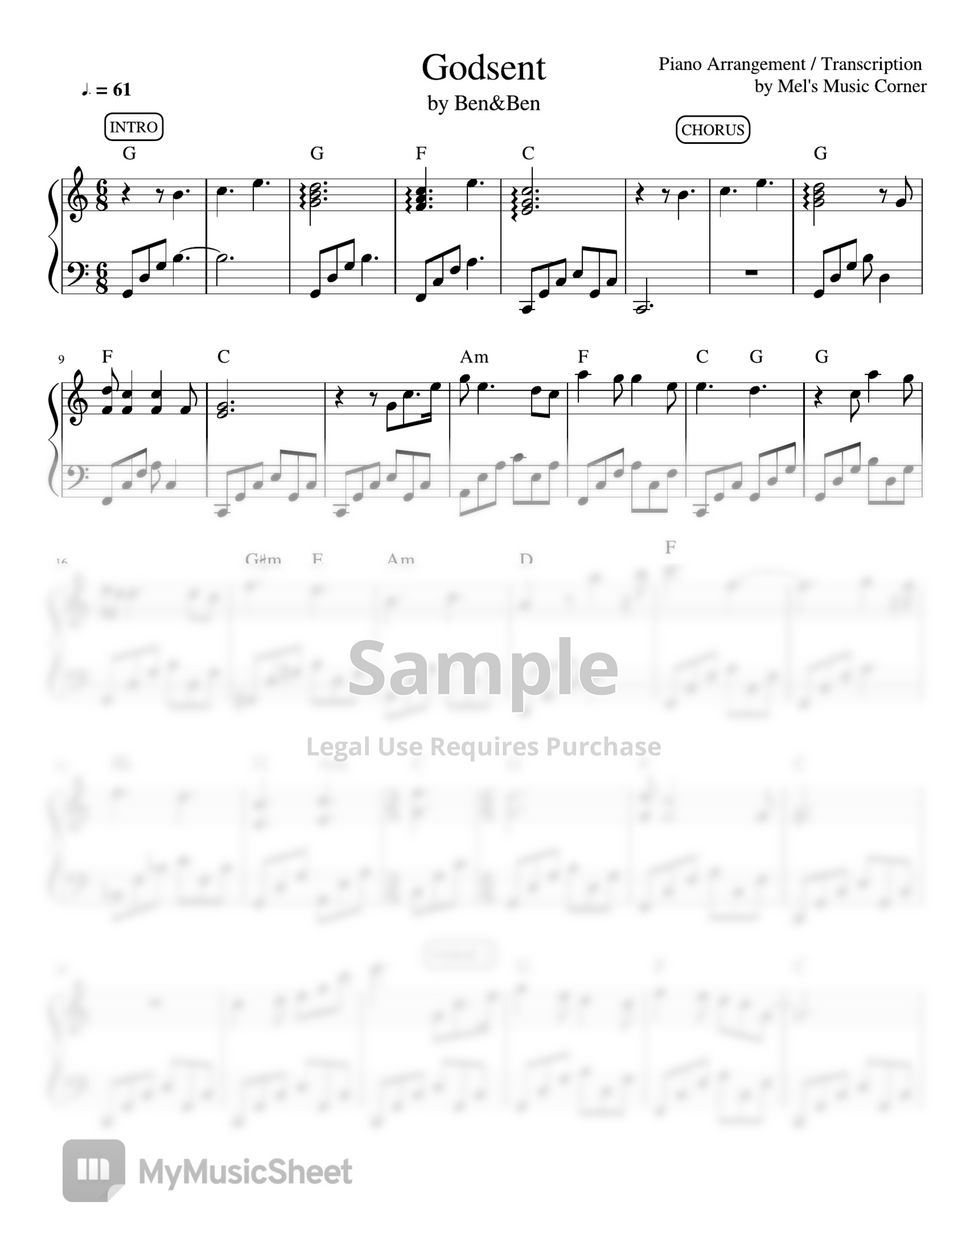 Ben&Ben - Godsent (piano sheet music) by Mel's Music Corner